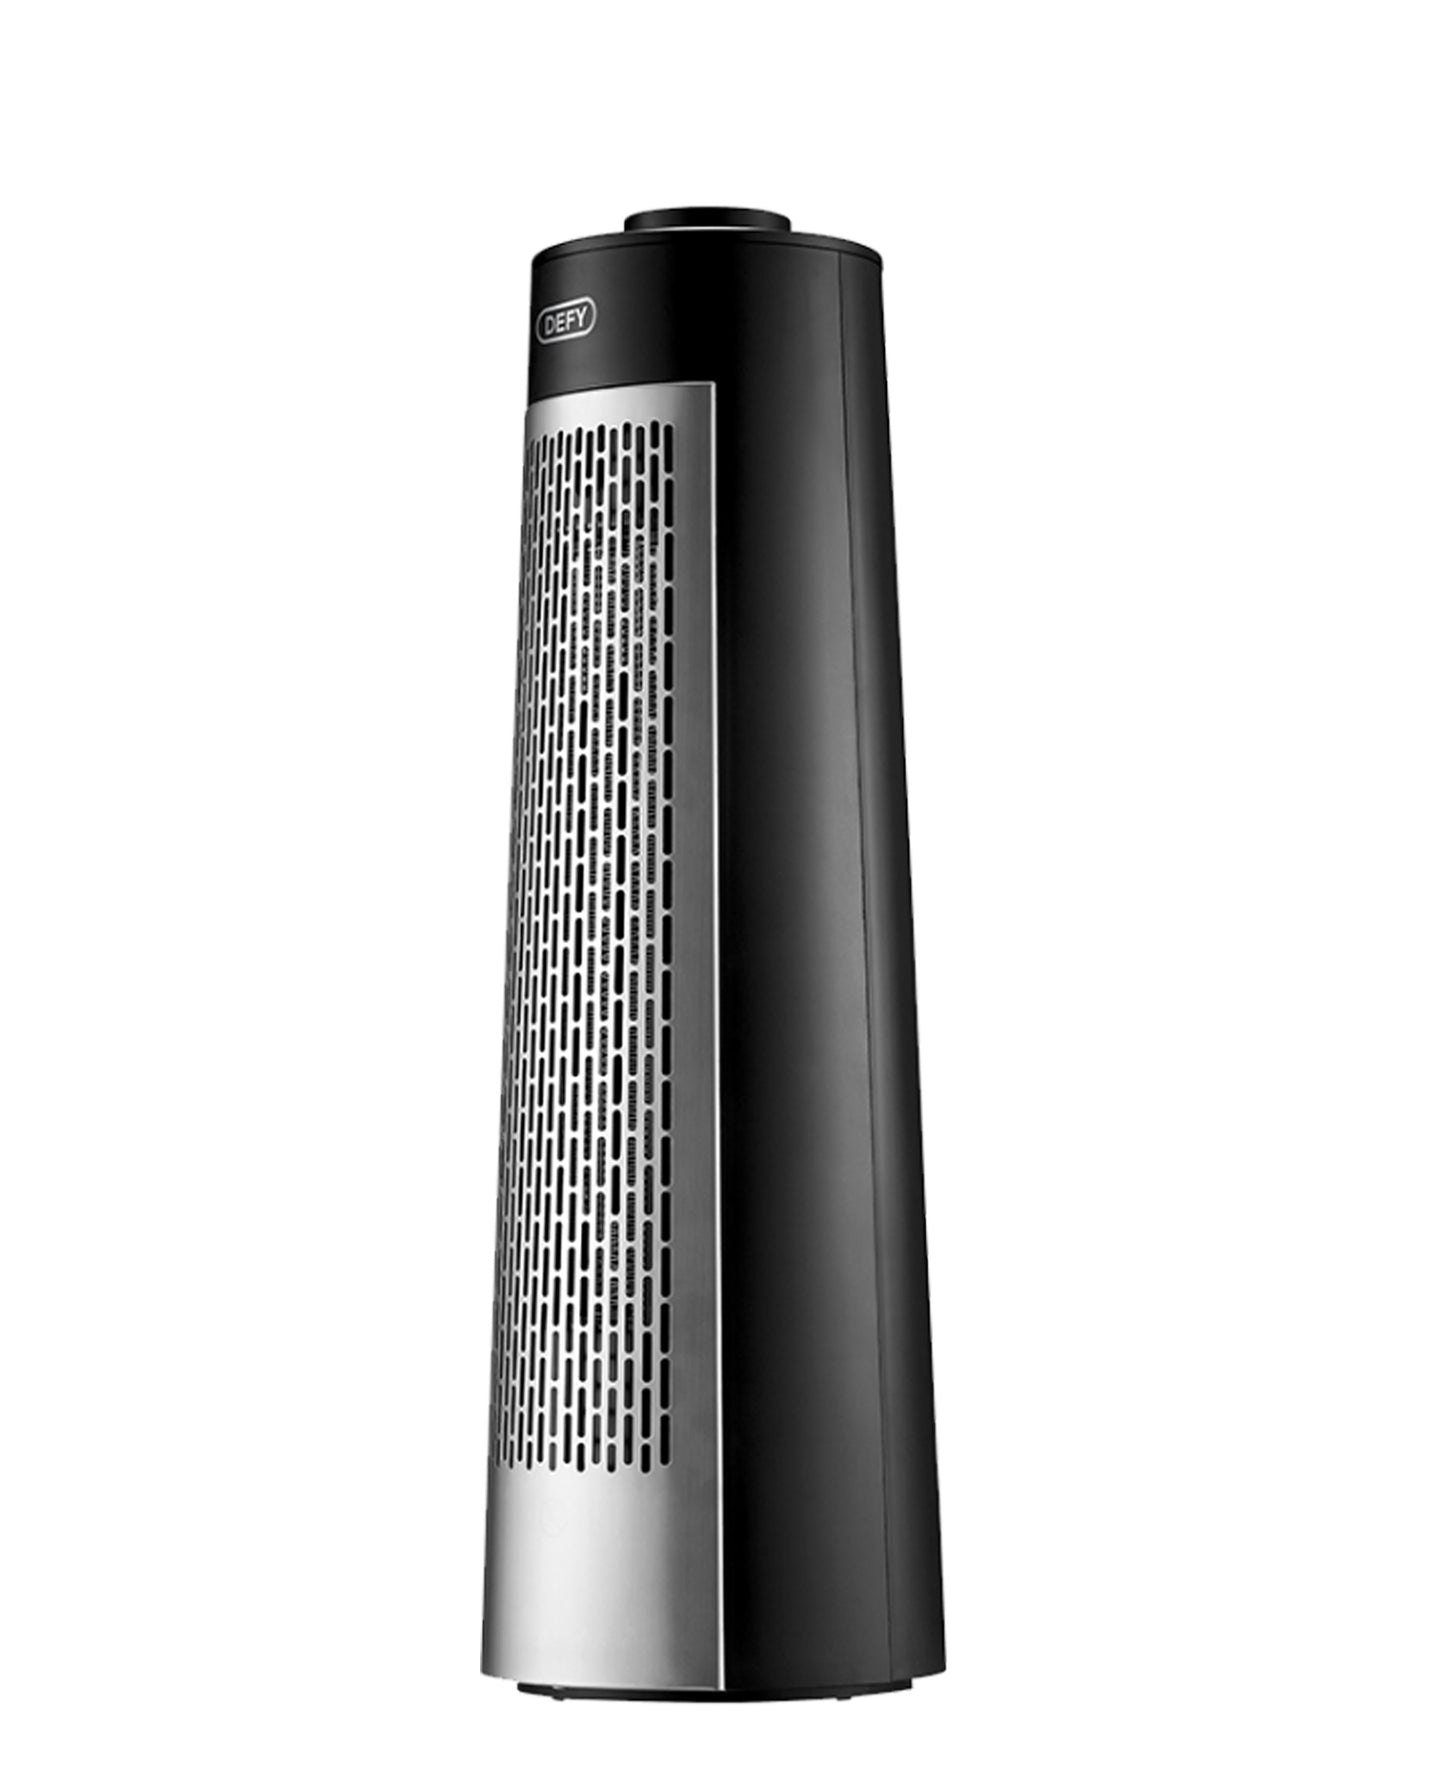 Defy 2200W PTC Ceramic Tower Heater – Black